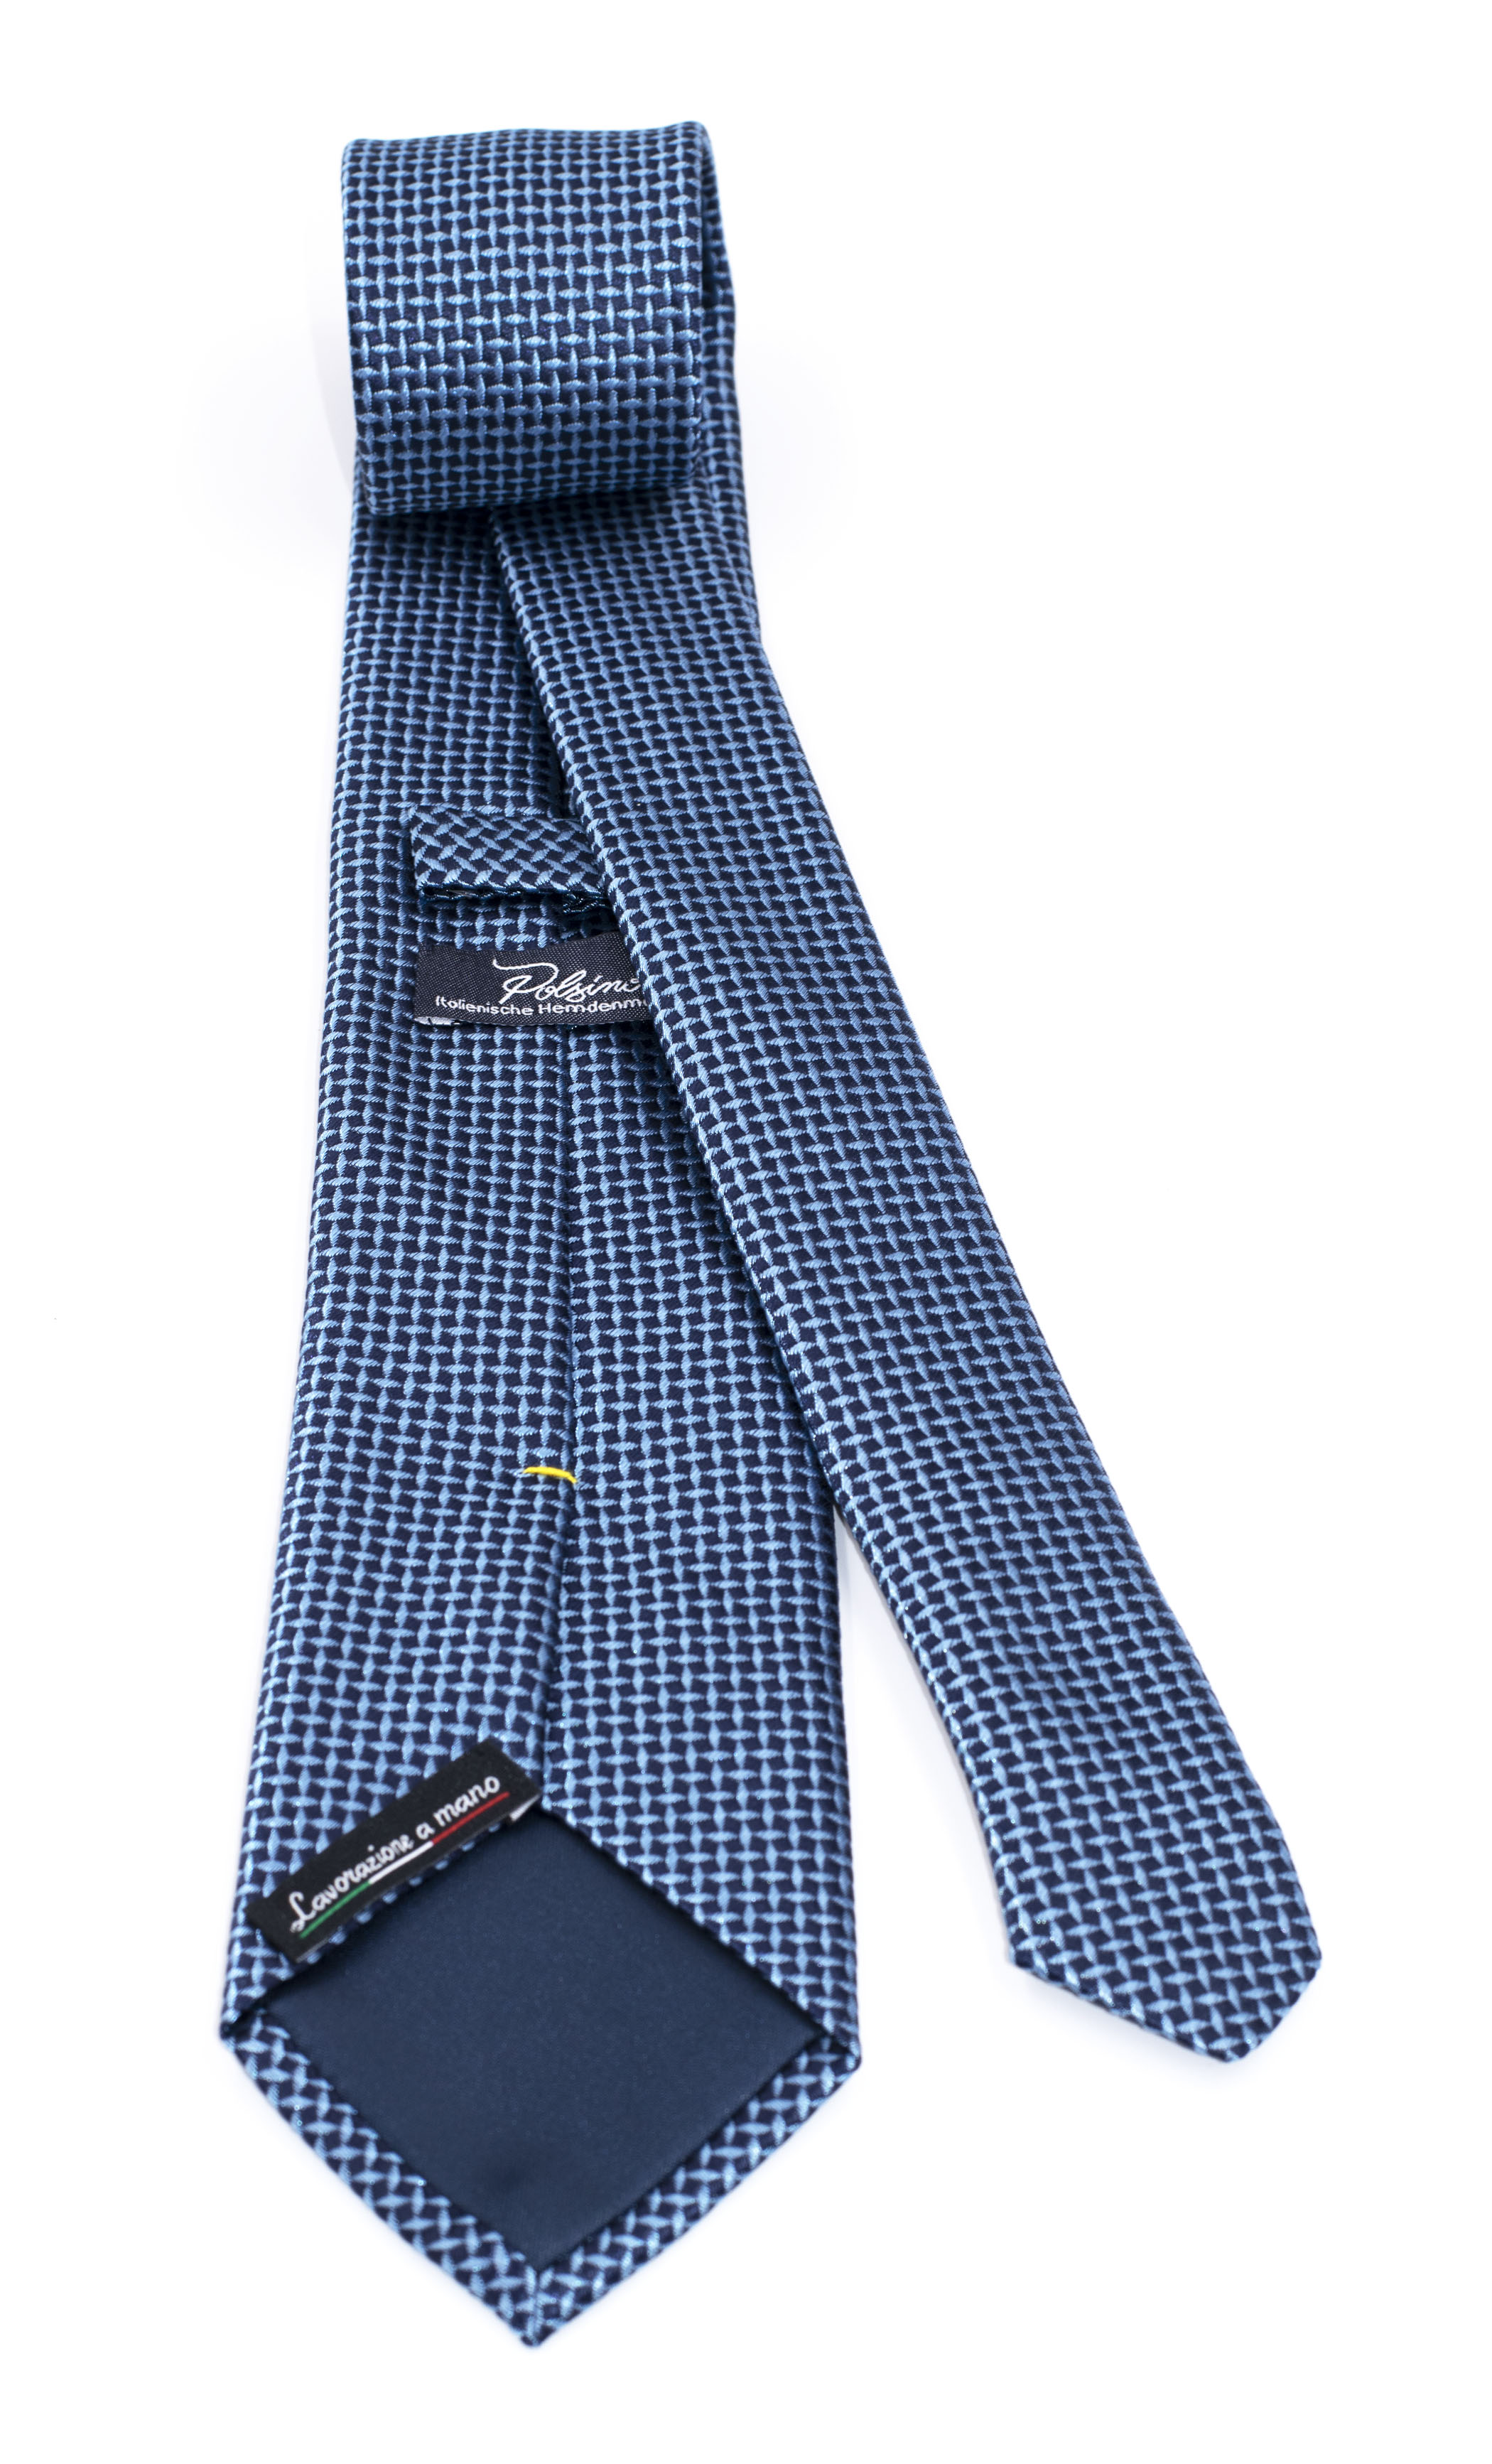 Hellblaue Krawatte mit dunkelblauem Polsino Muster –